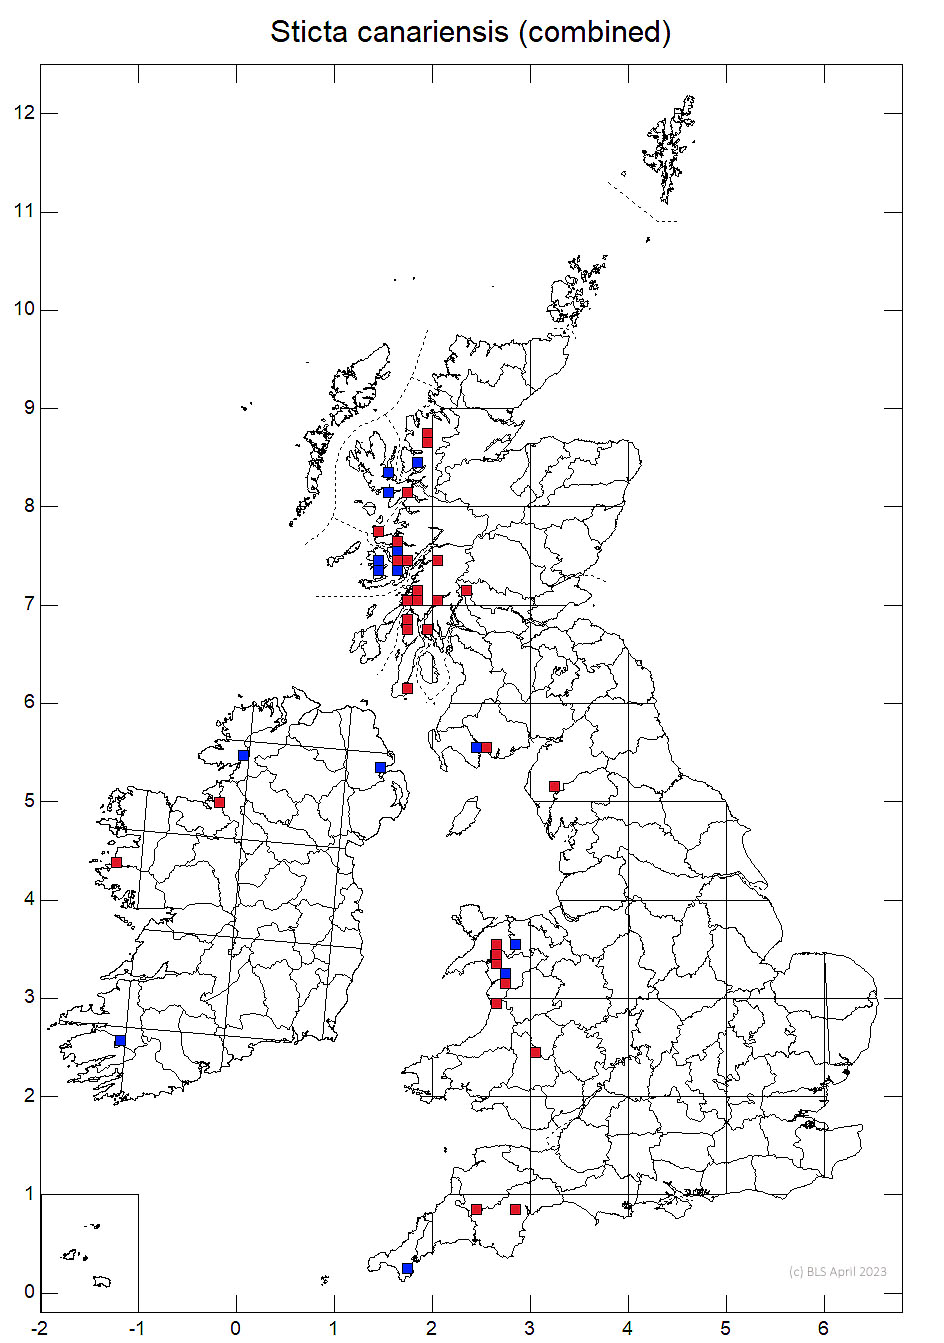 Sticta canariensis (combined) 10km sq distribution map